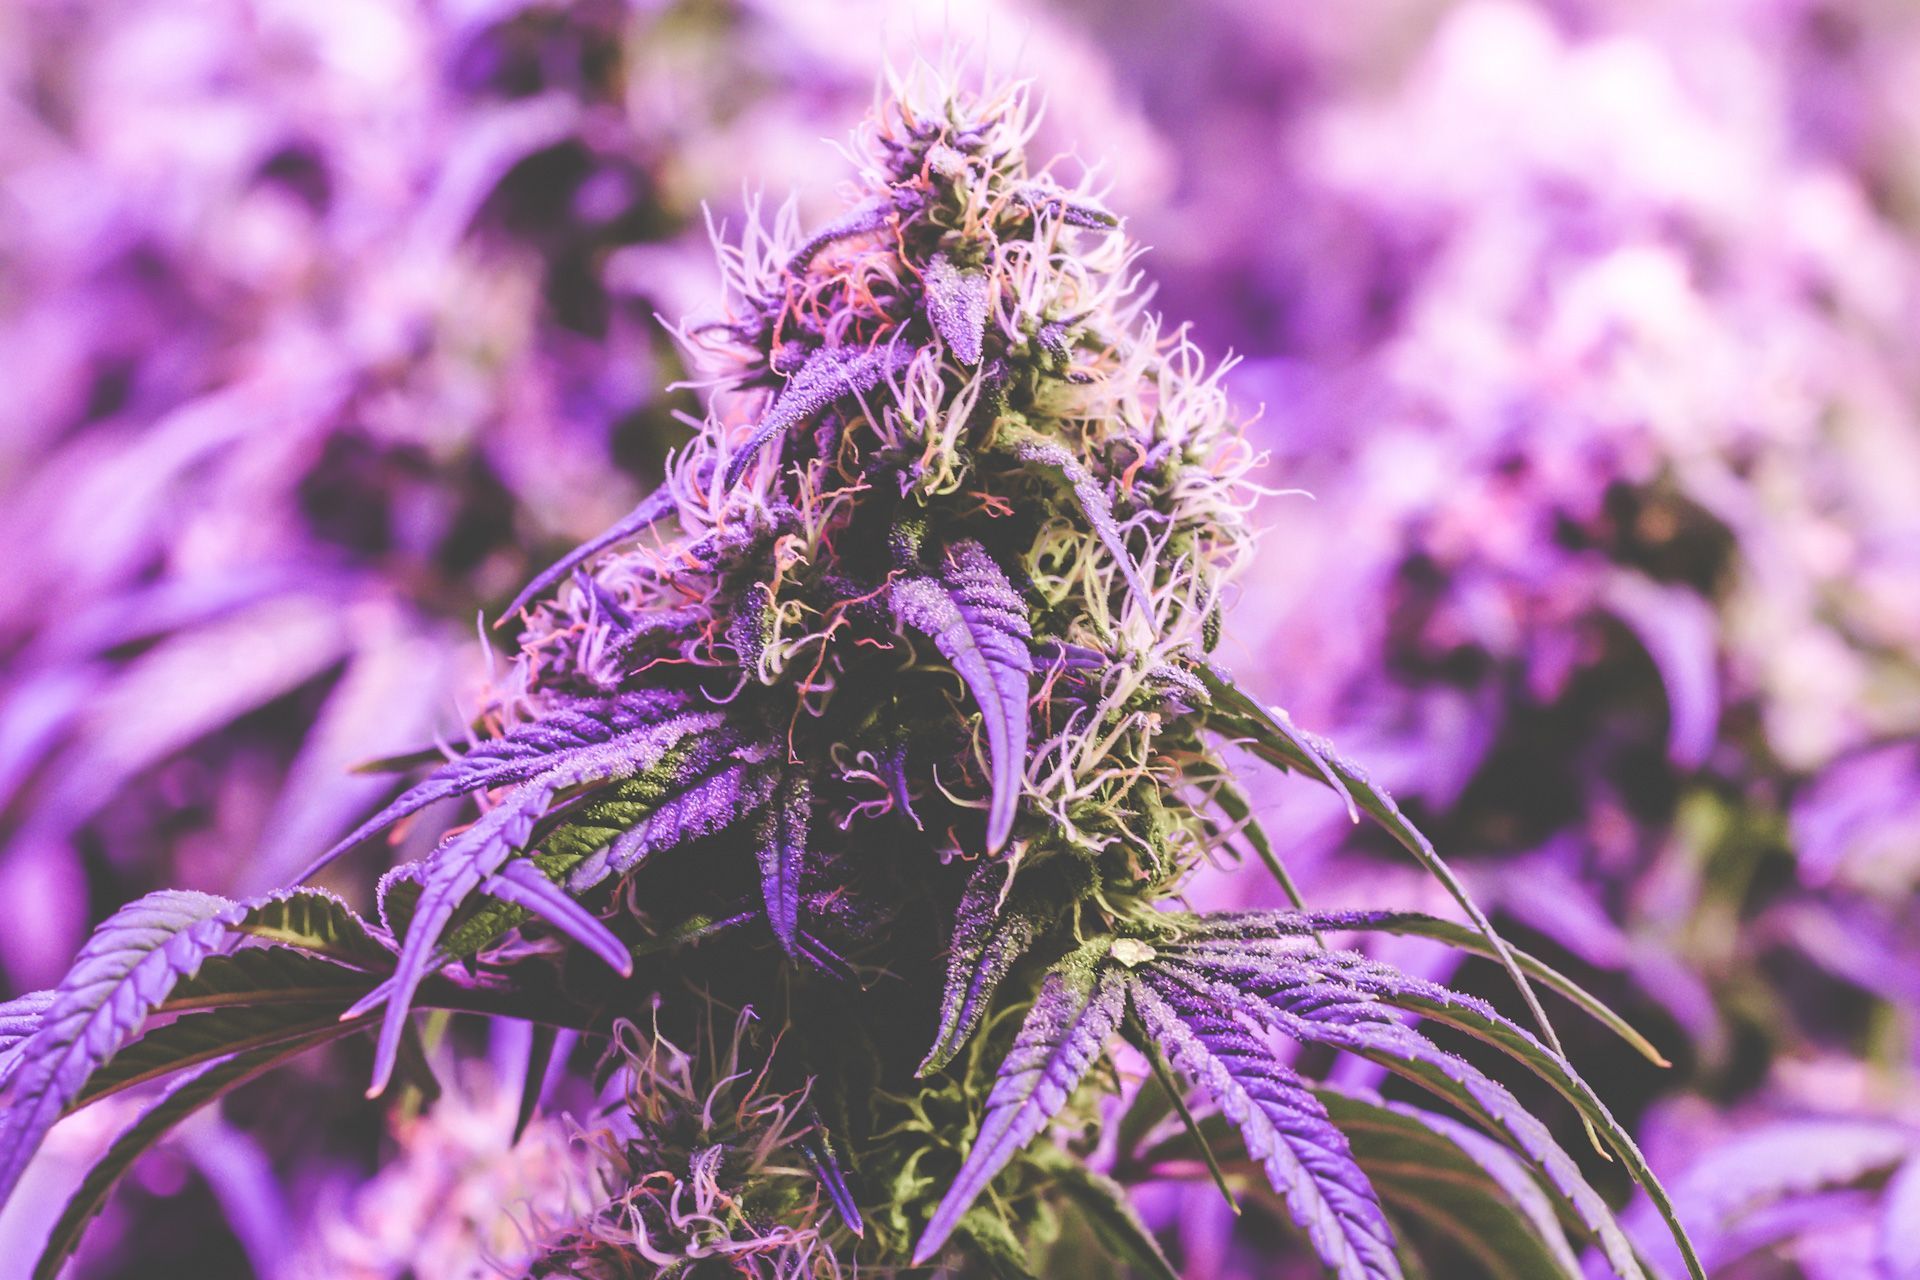 Up close shot of a large beautiful maturing purple legal medical marijuana cannabis bud